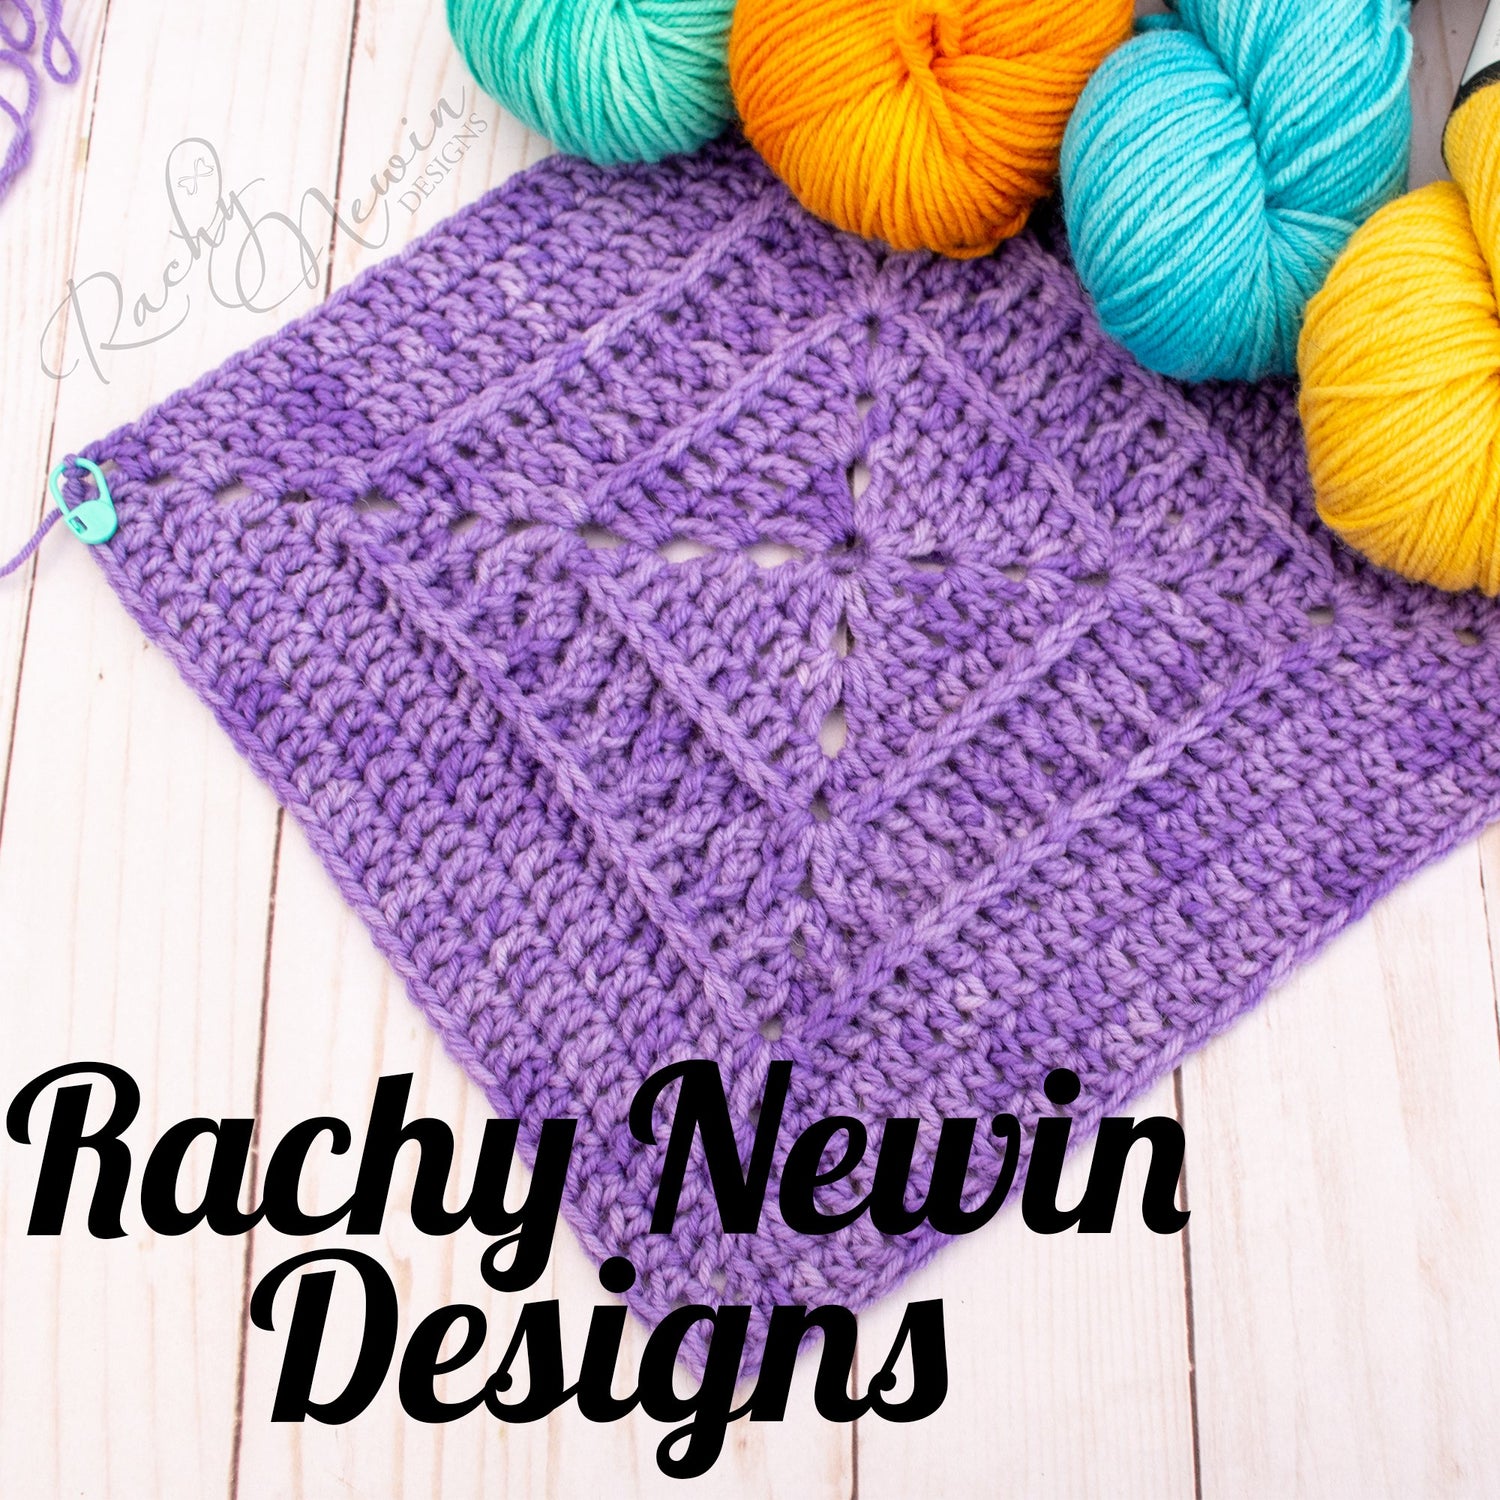 Rachy Newin Designs' Patterns